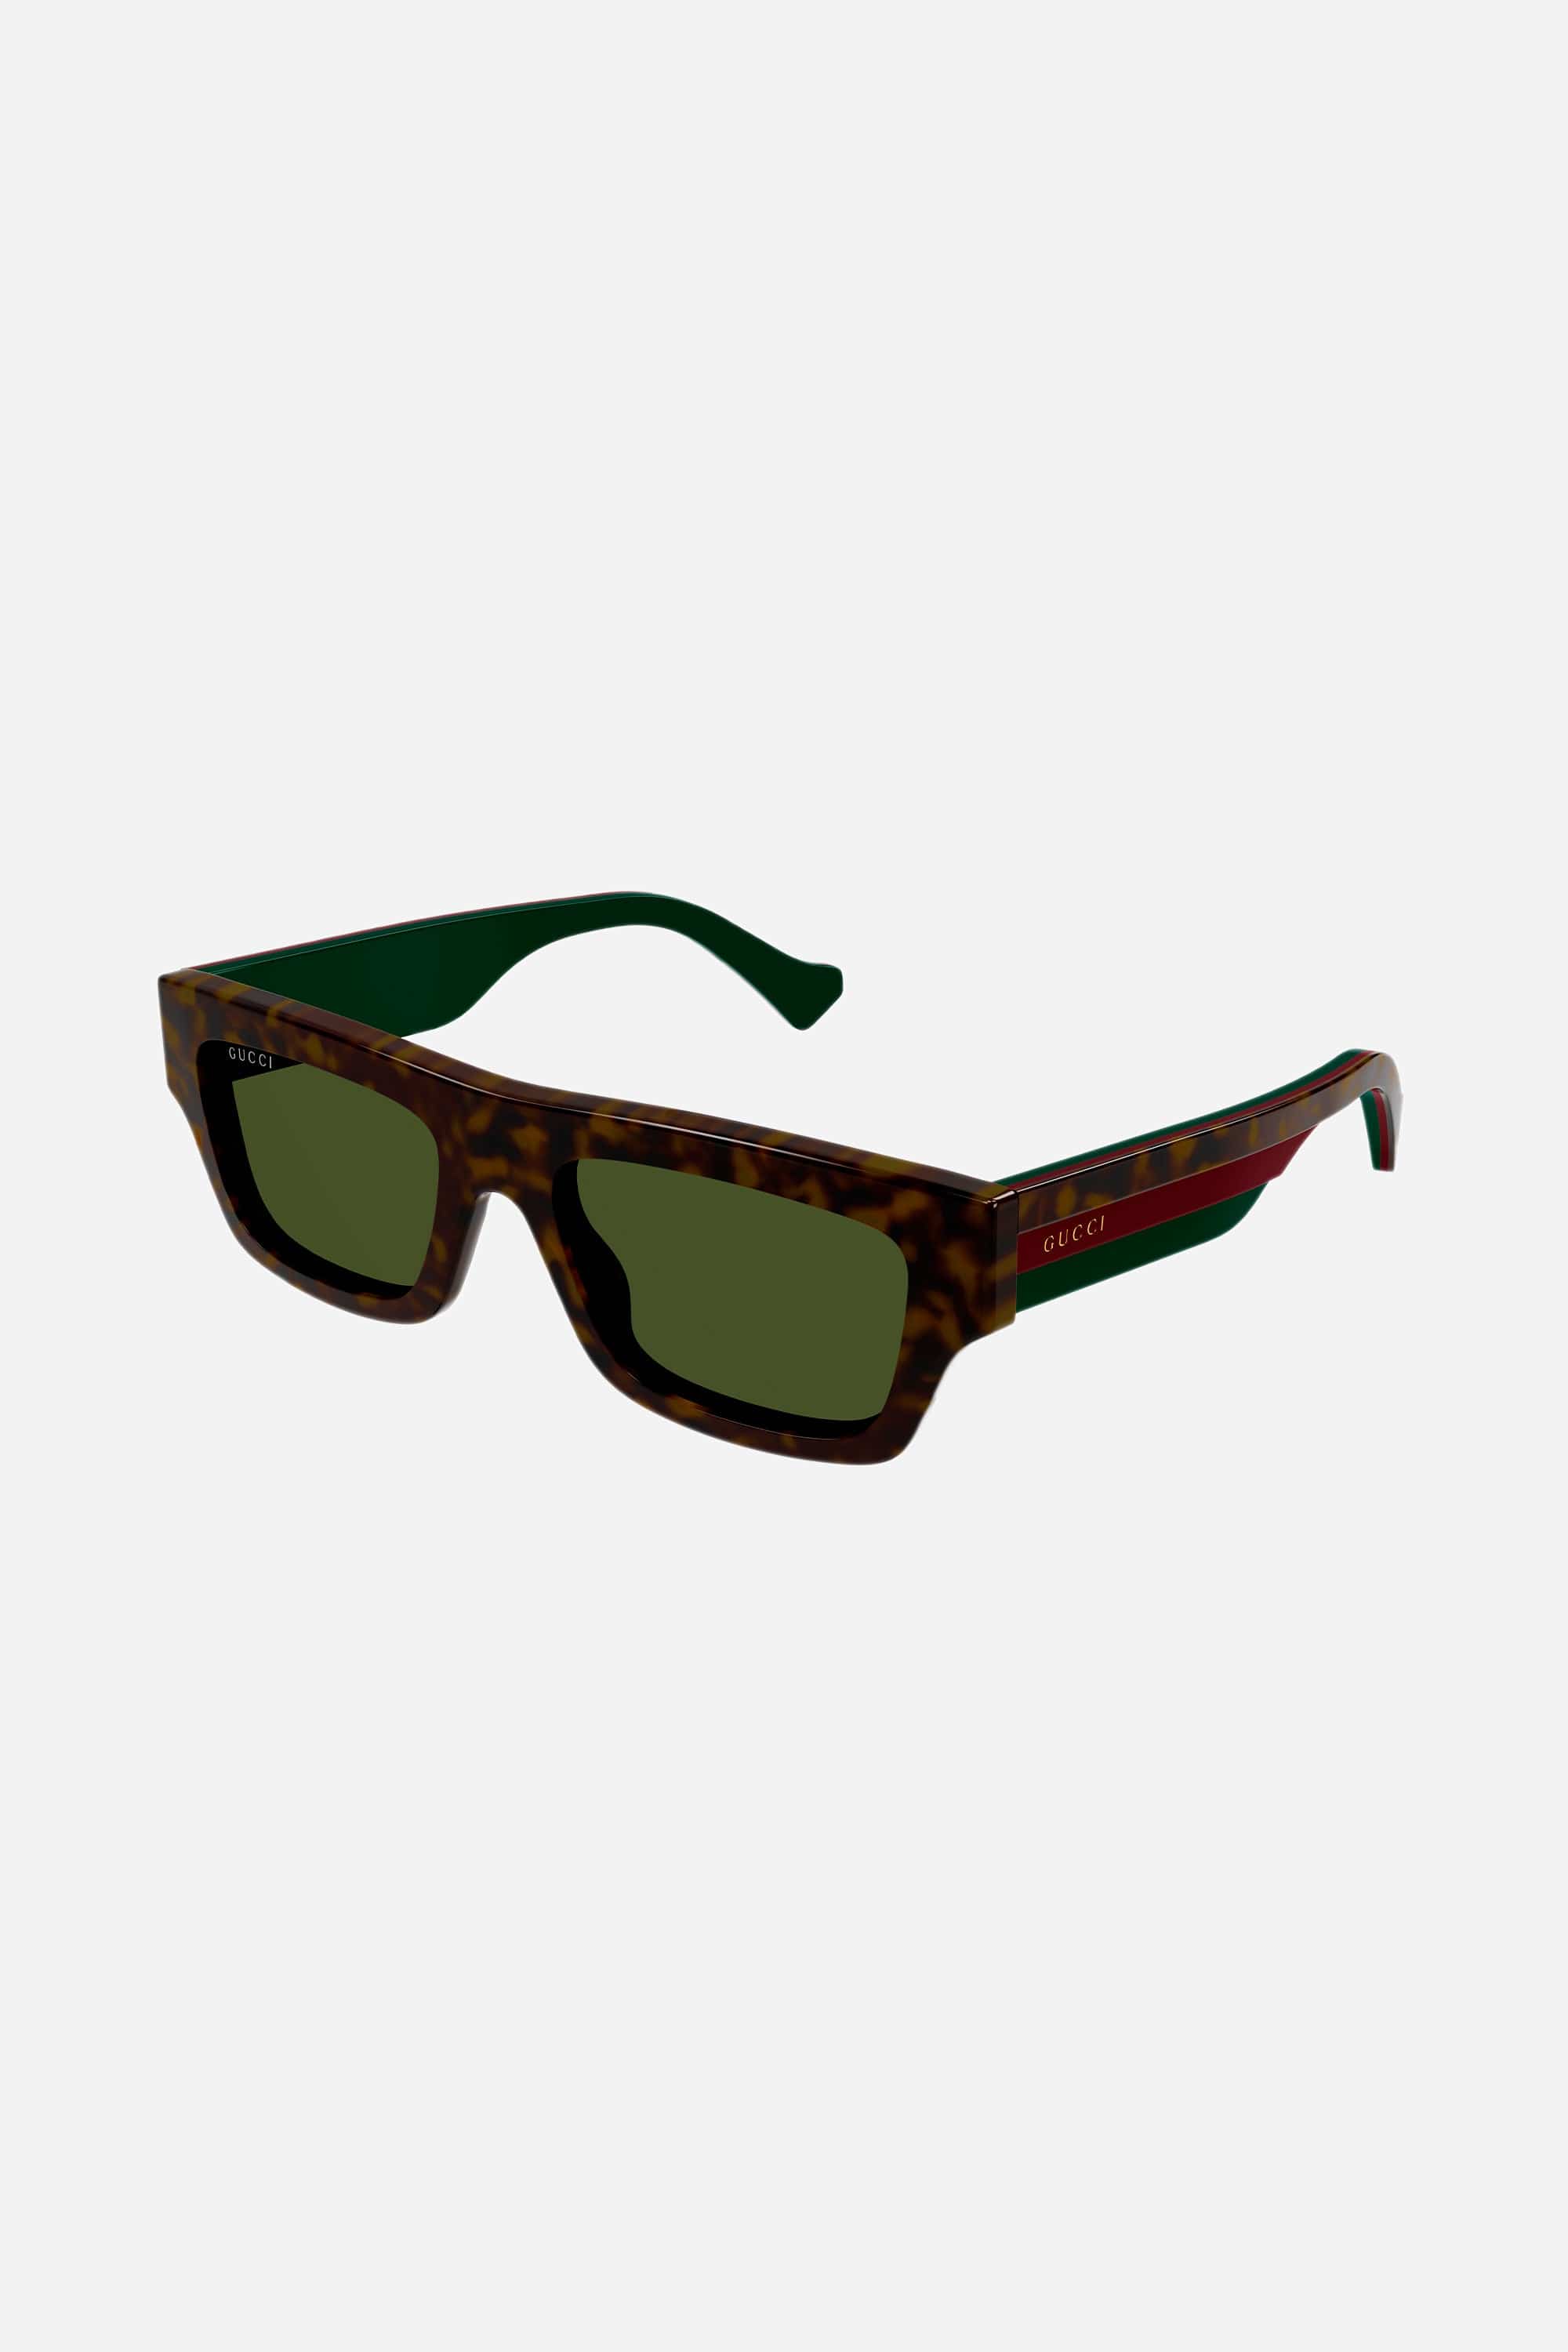 Gucci flat top havana sunglasses with web temple - Eyewear Club